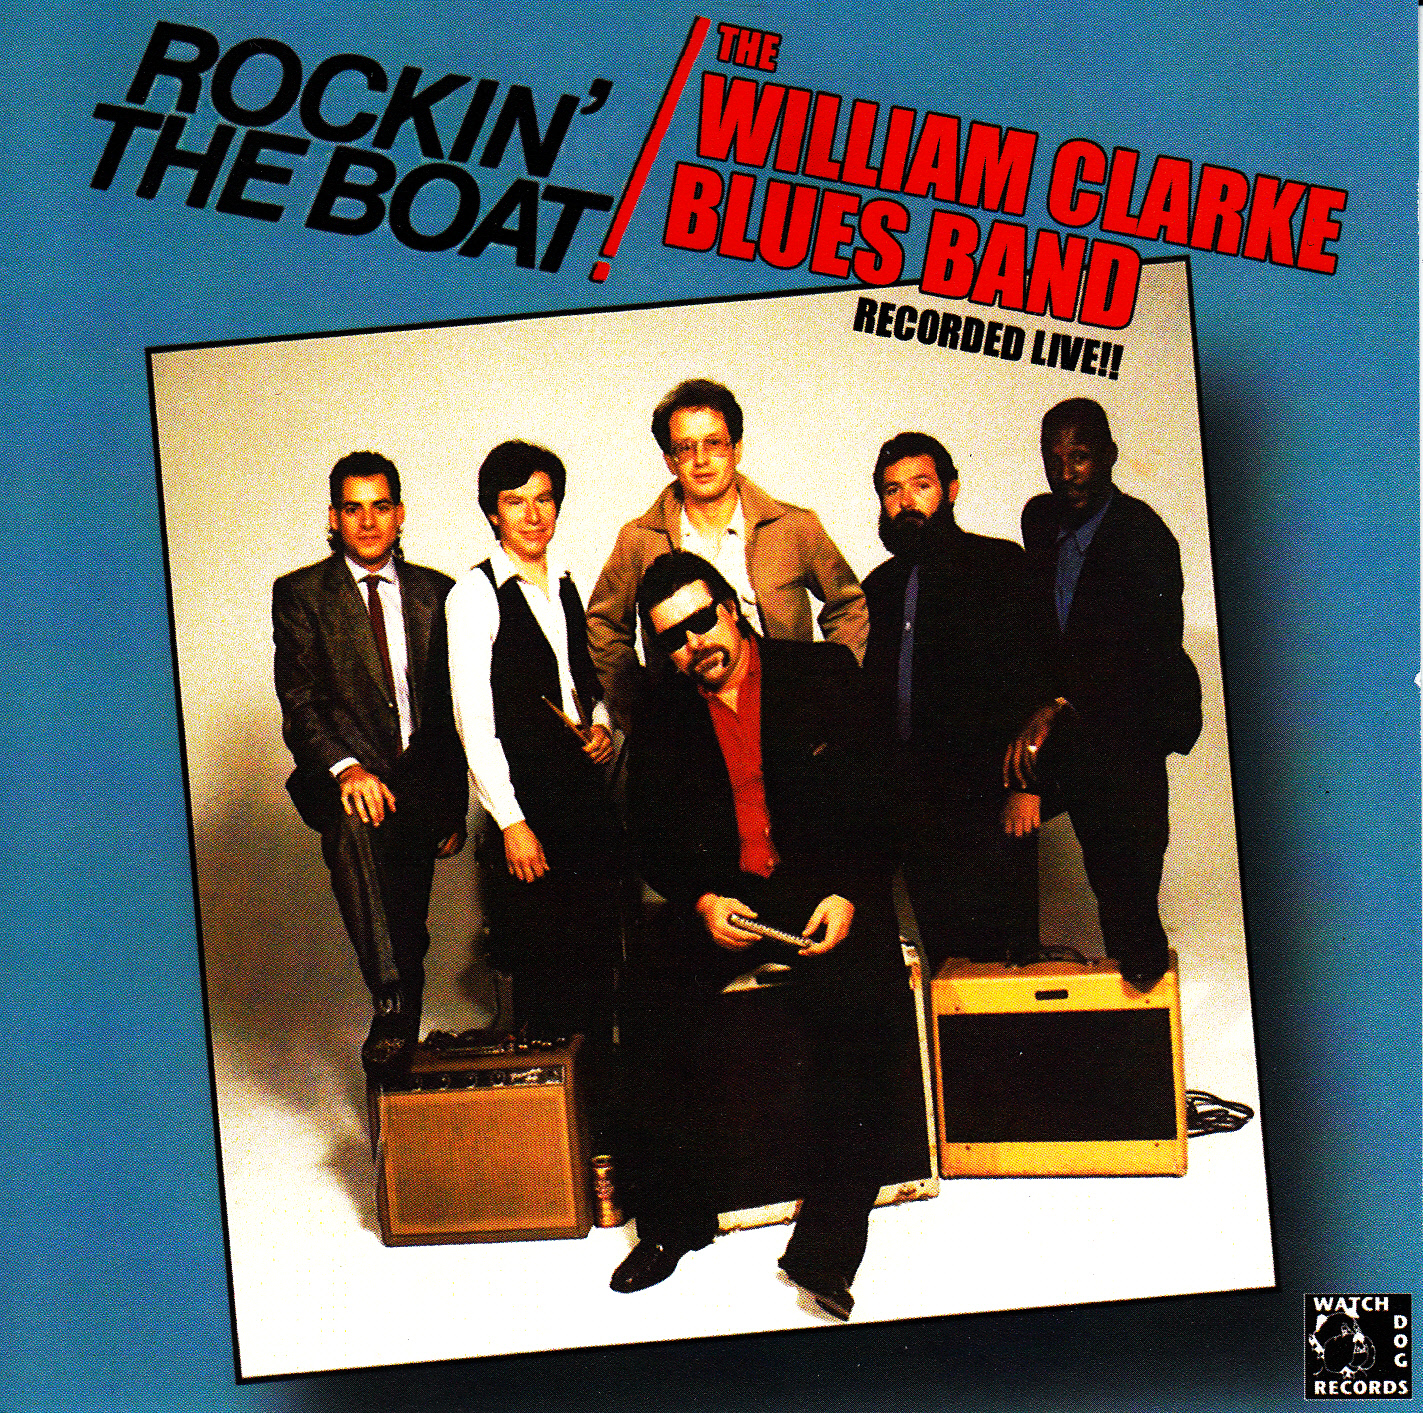 William Clarke Blues Band - Rockin' The Boat